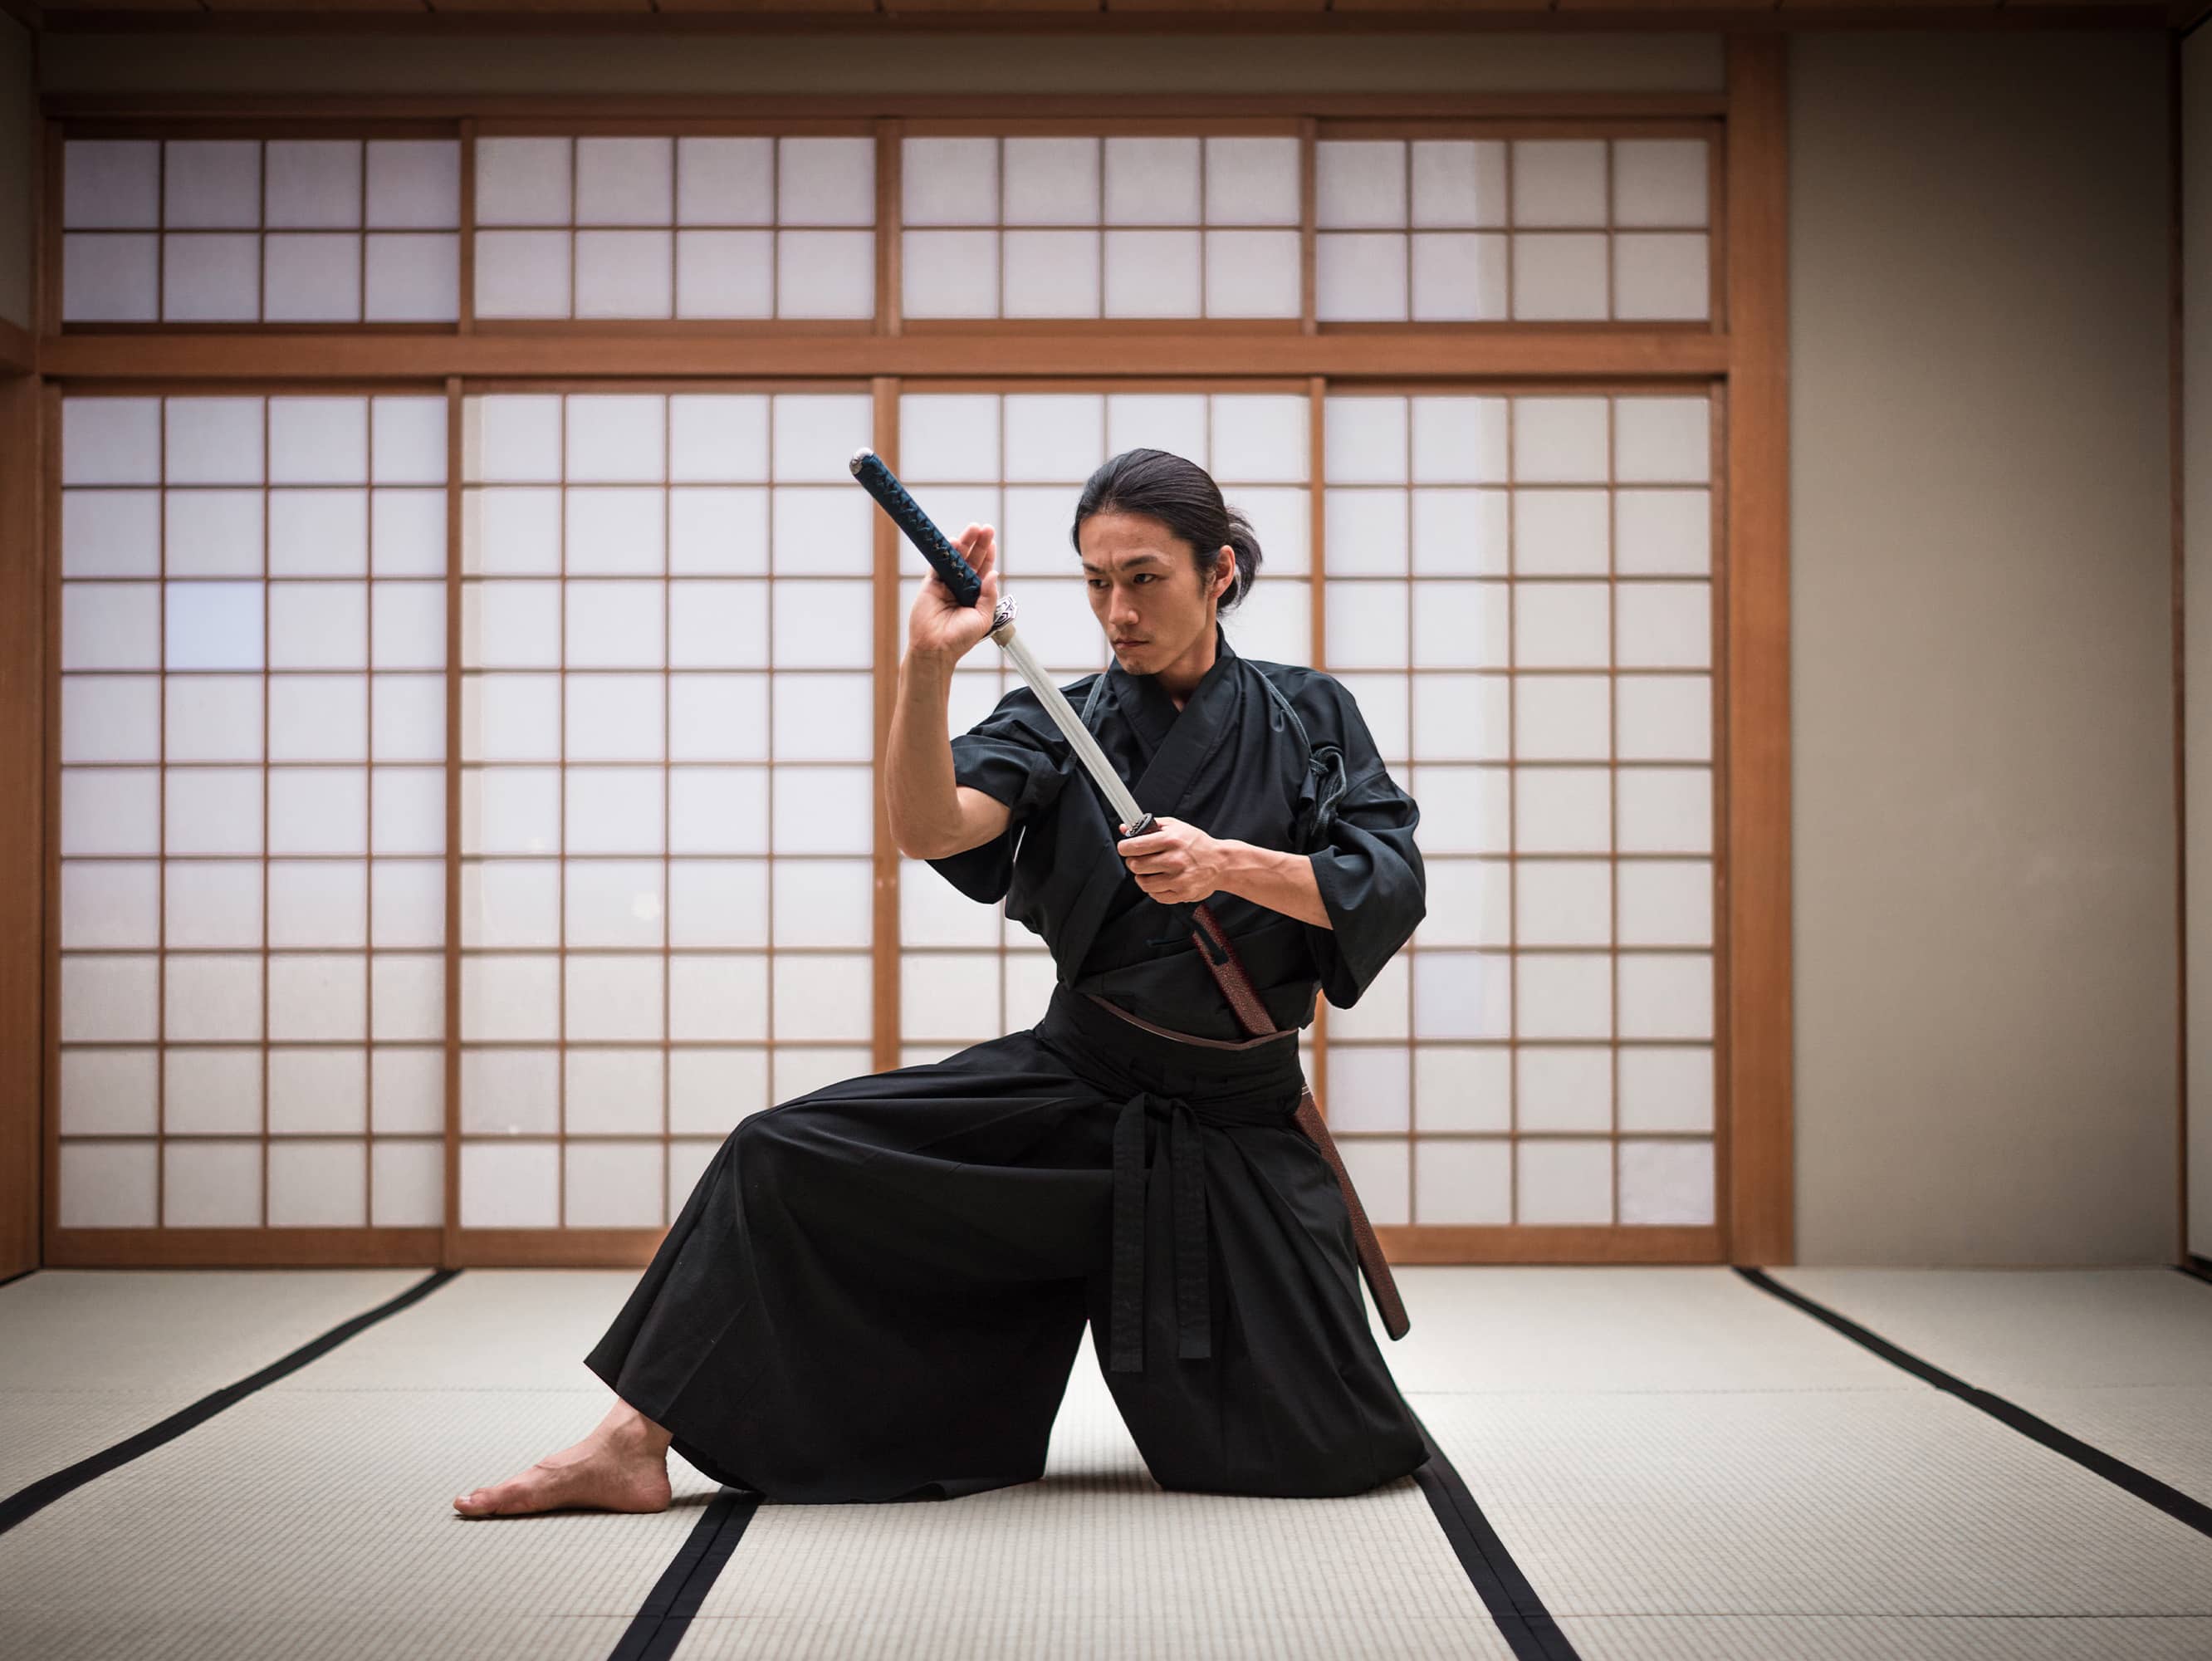  LEARN THE SECRETS OF SAMURAI SWORD FIGHTING  